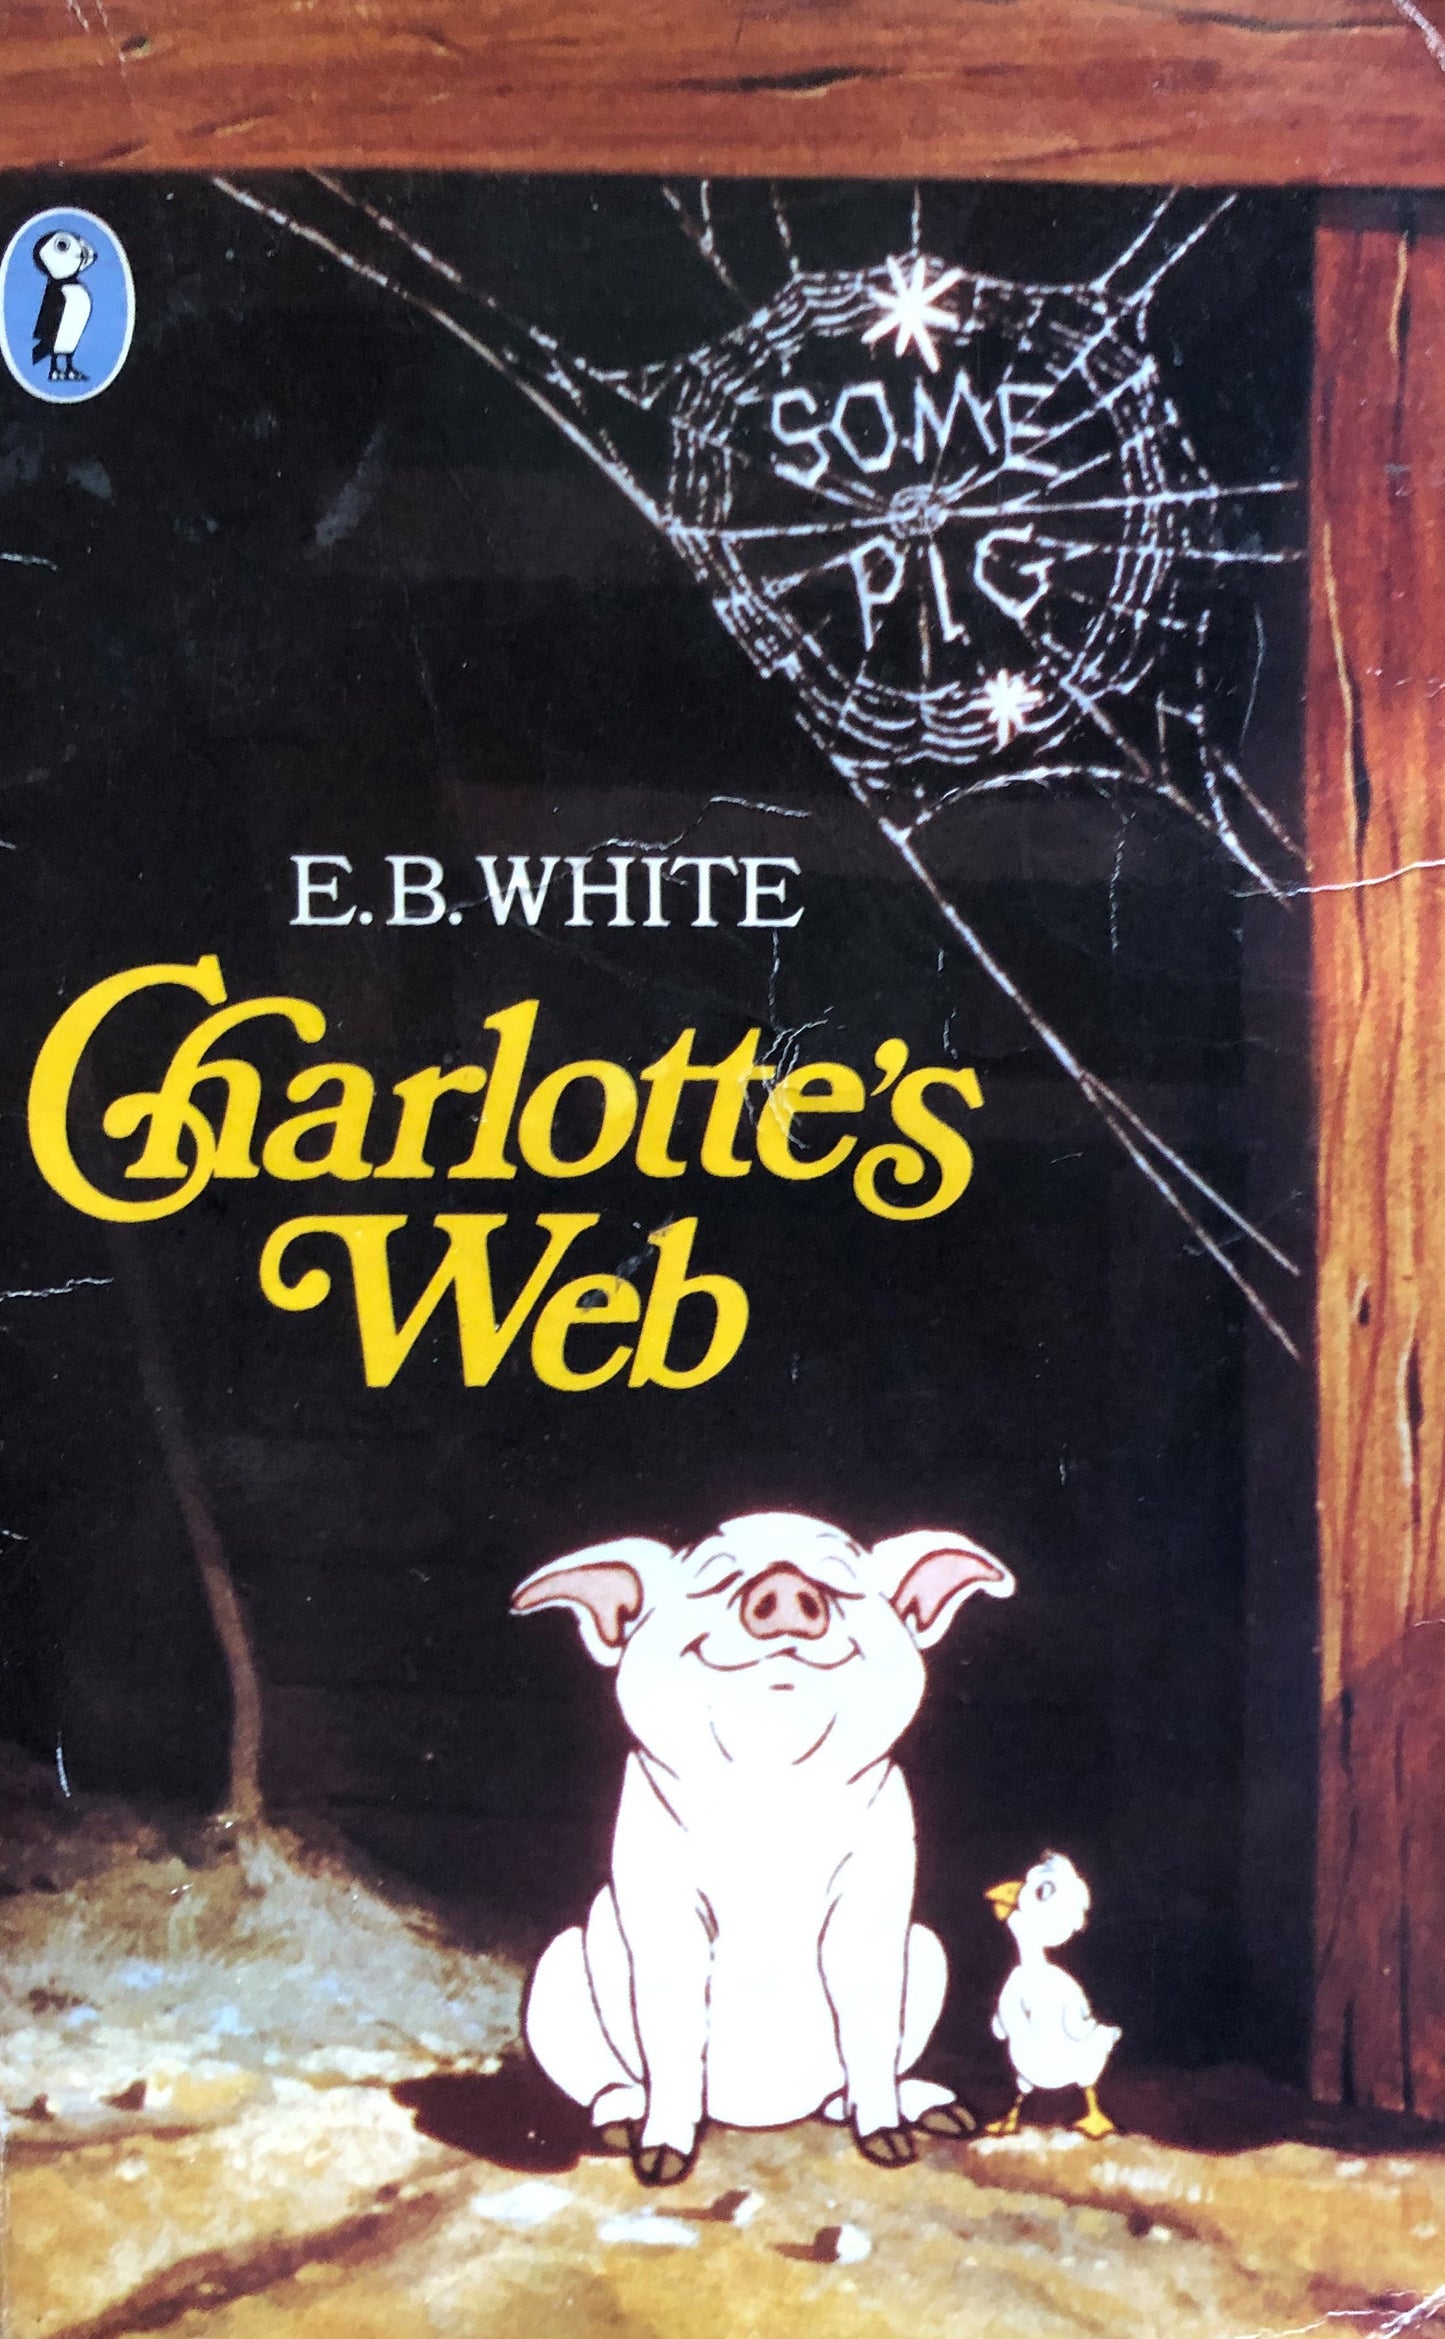 Charlotte's Web (1985)